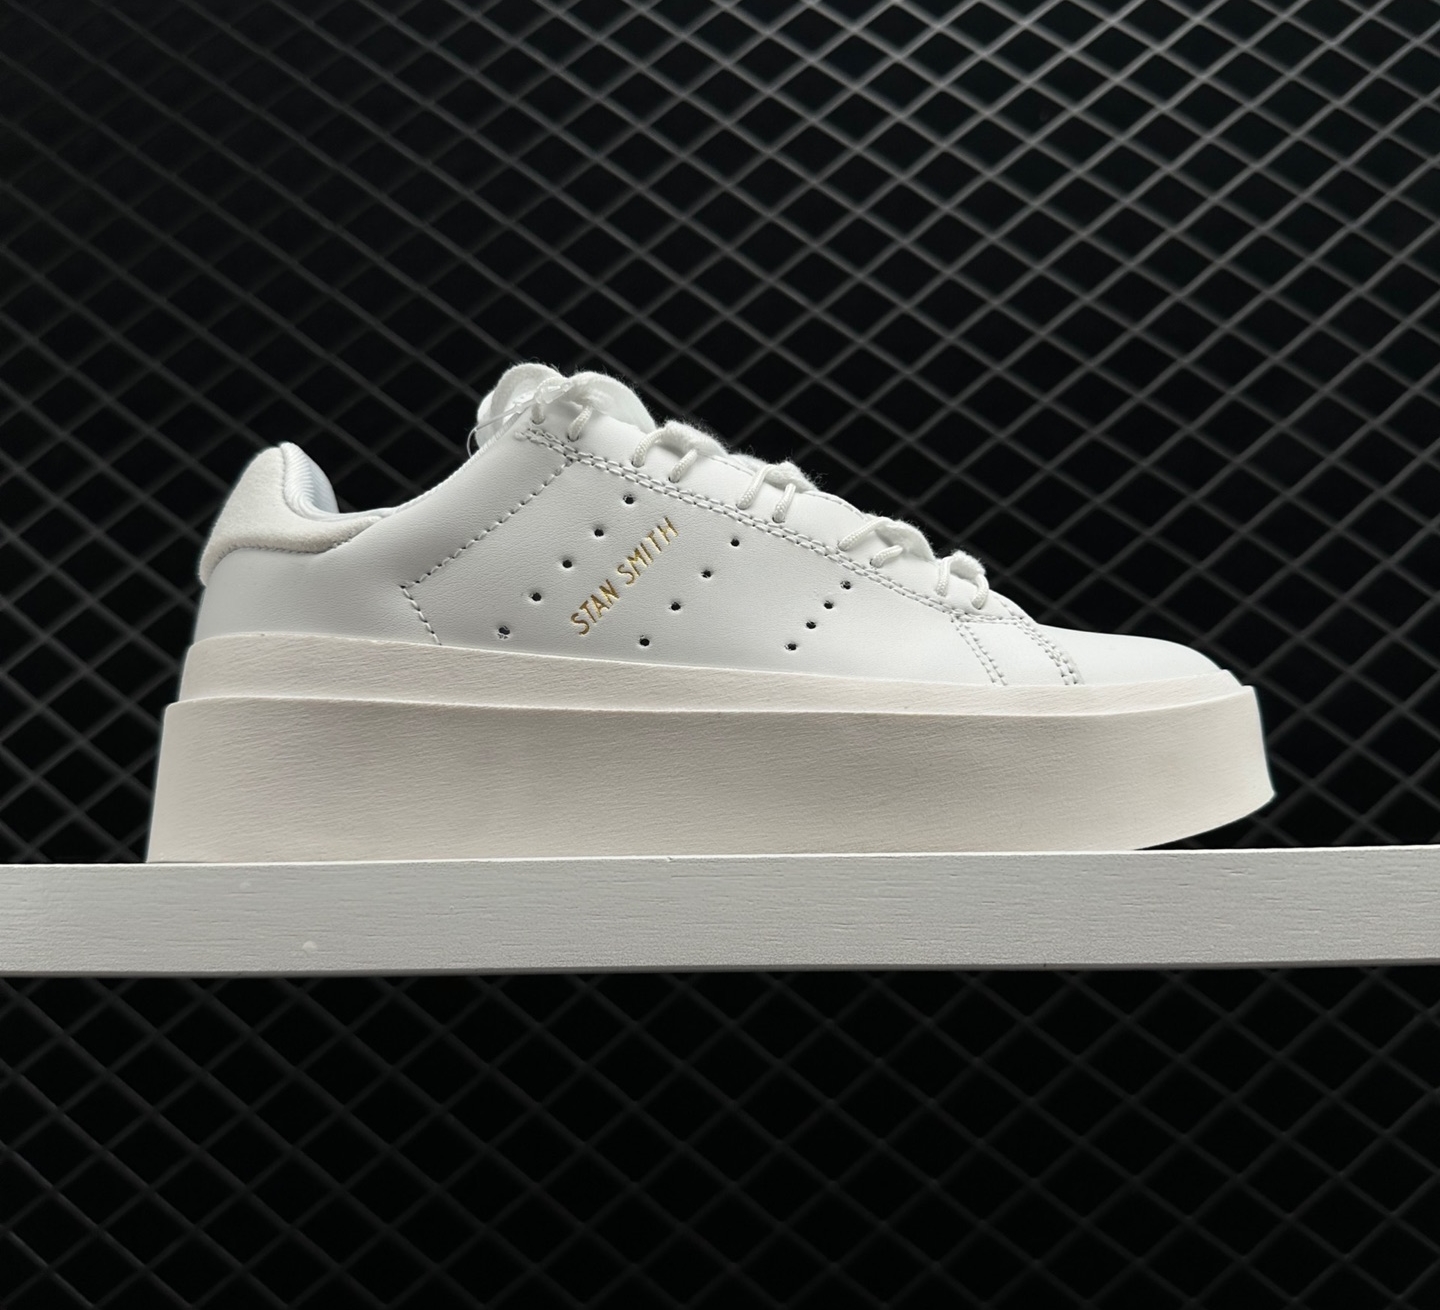 Adidas Stan Smith Bonega 'Triple White' GY3056 - Classic Style and All-White Perfection